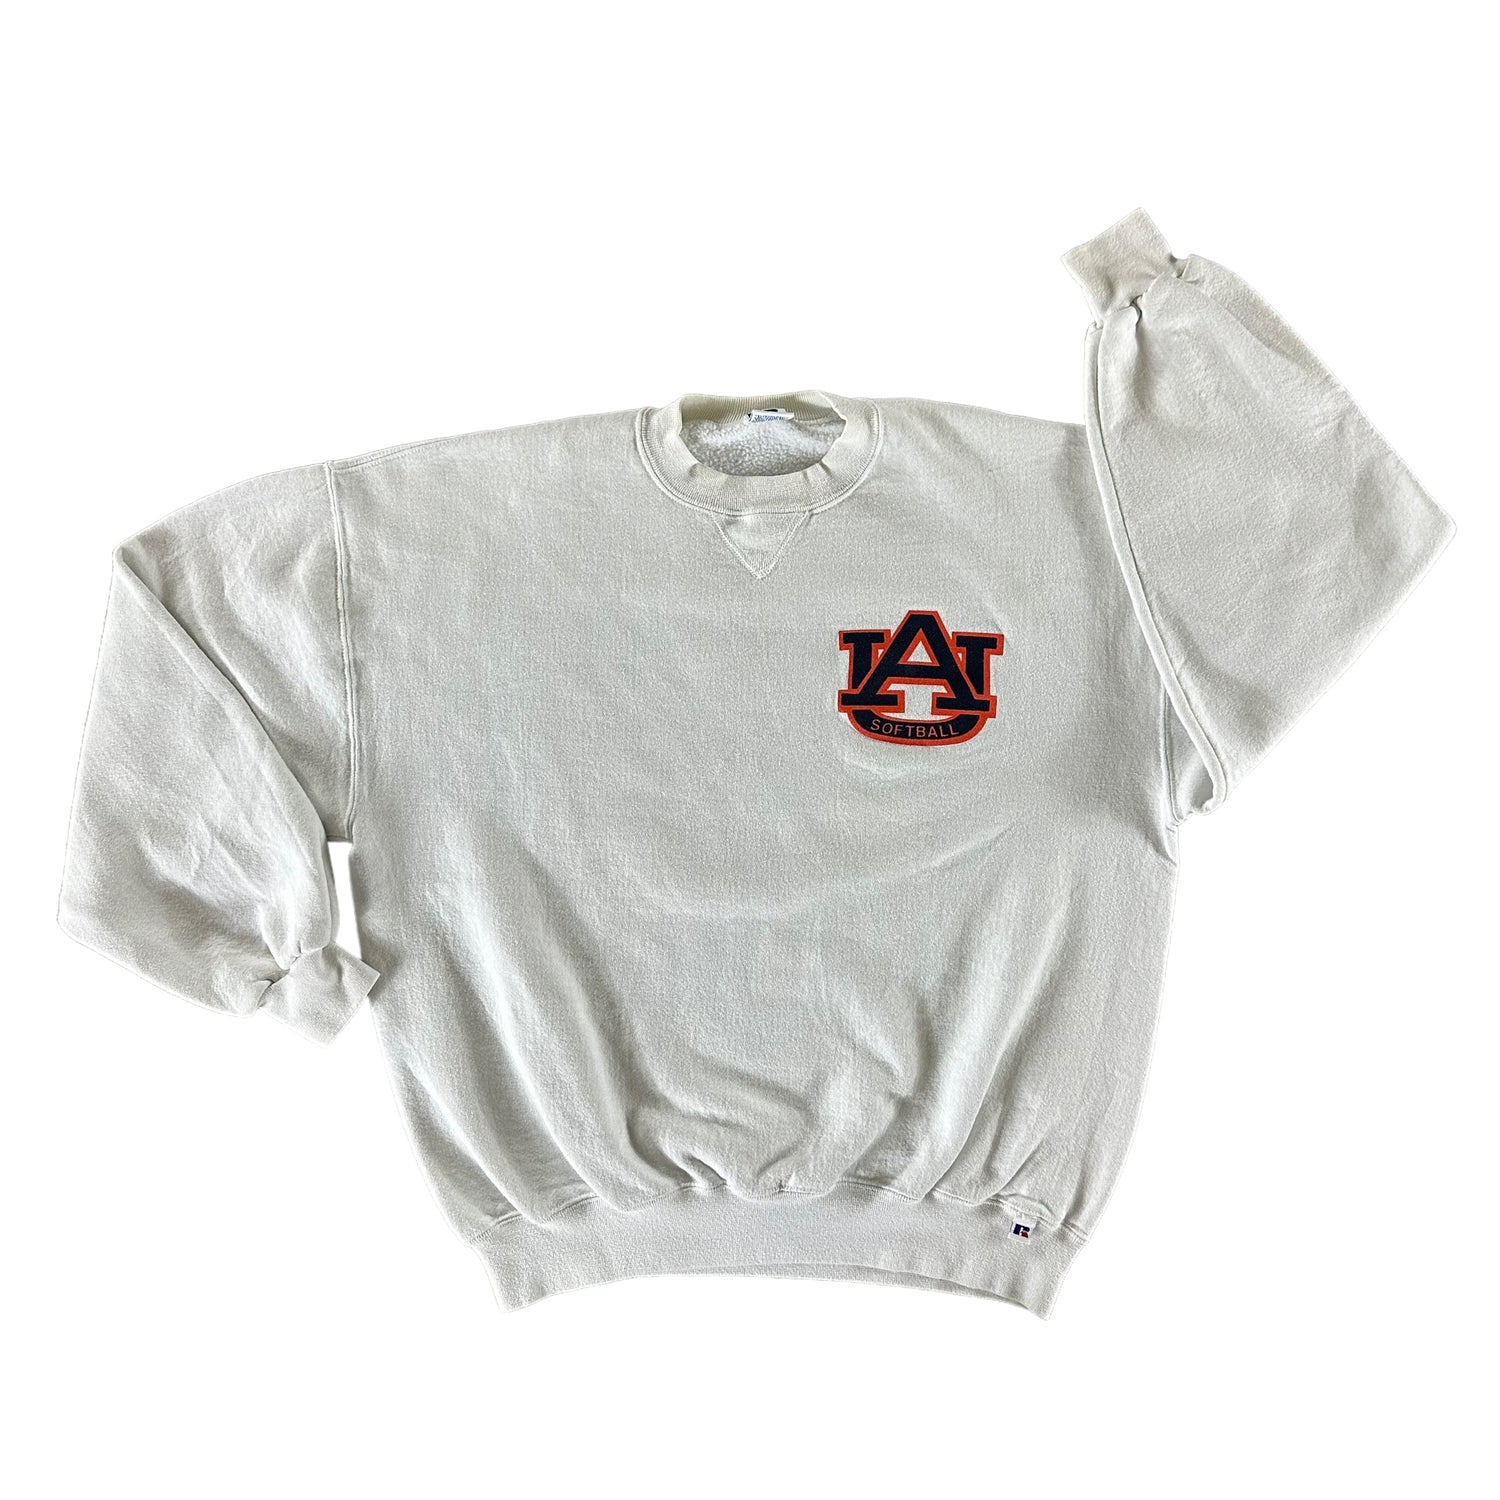 Vintage 1990s Auburn University Sweatshirt size XL